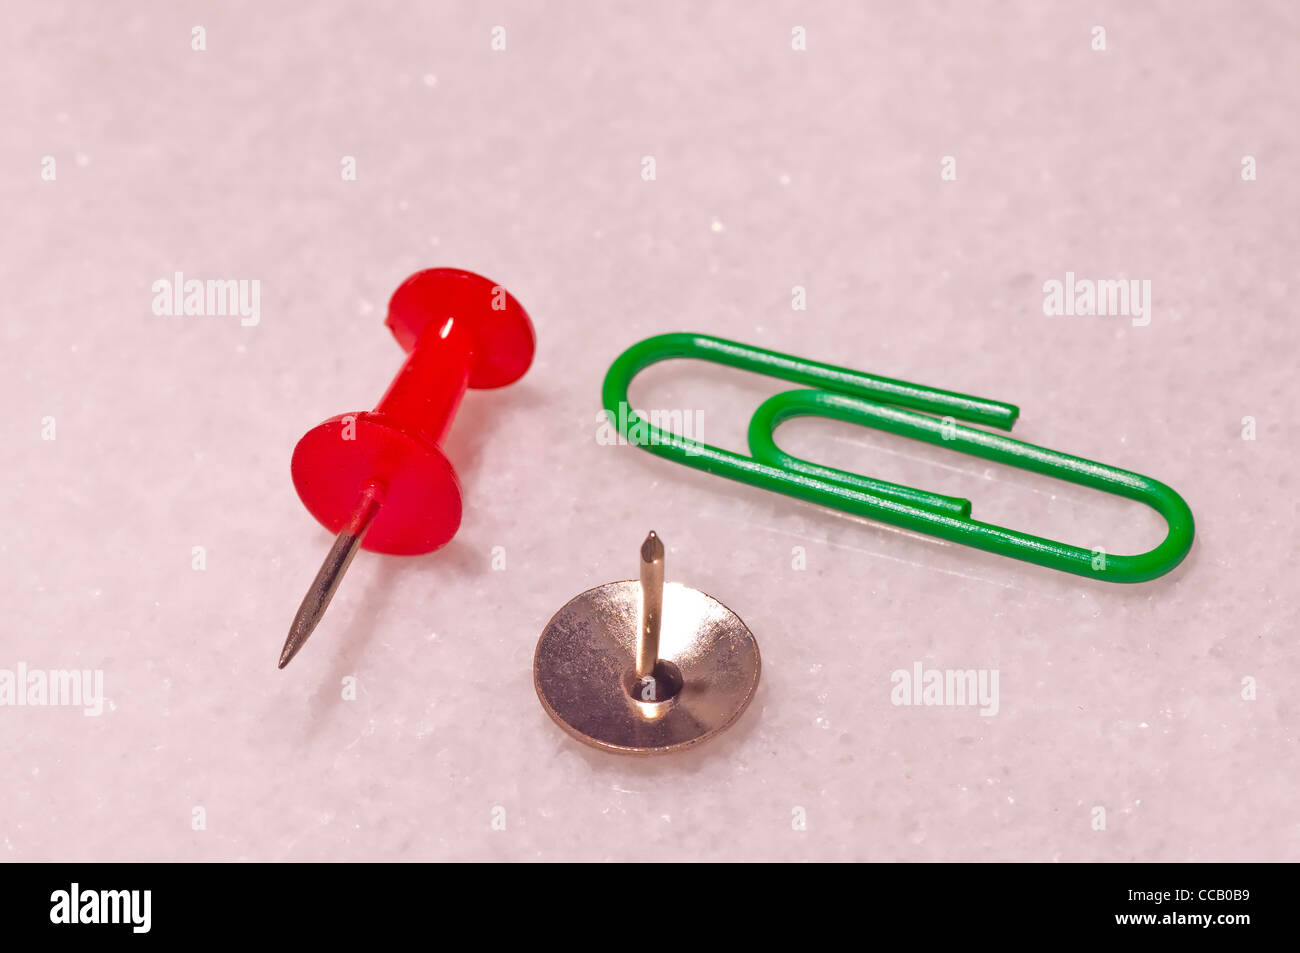 Thumb tack push pin hi-res stock photography and images - Alamy